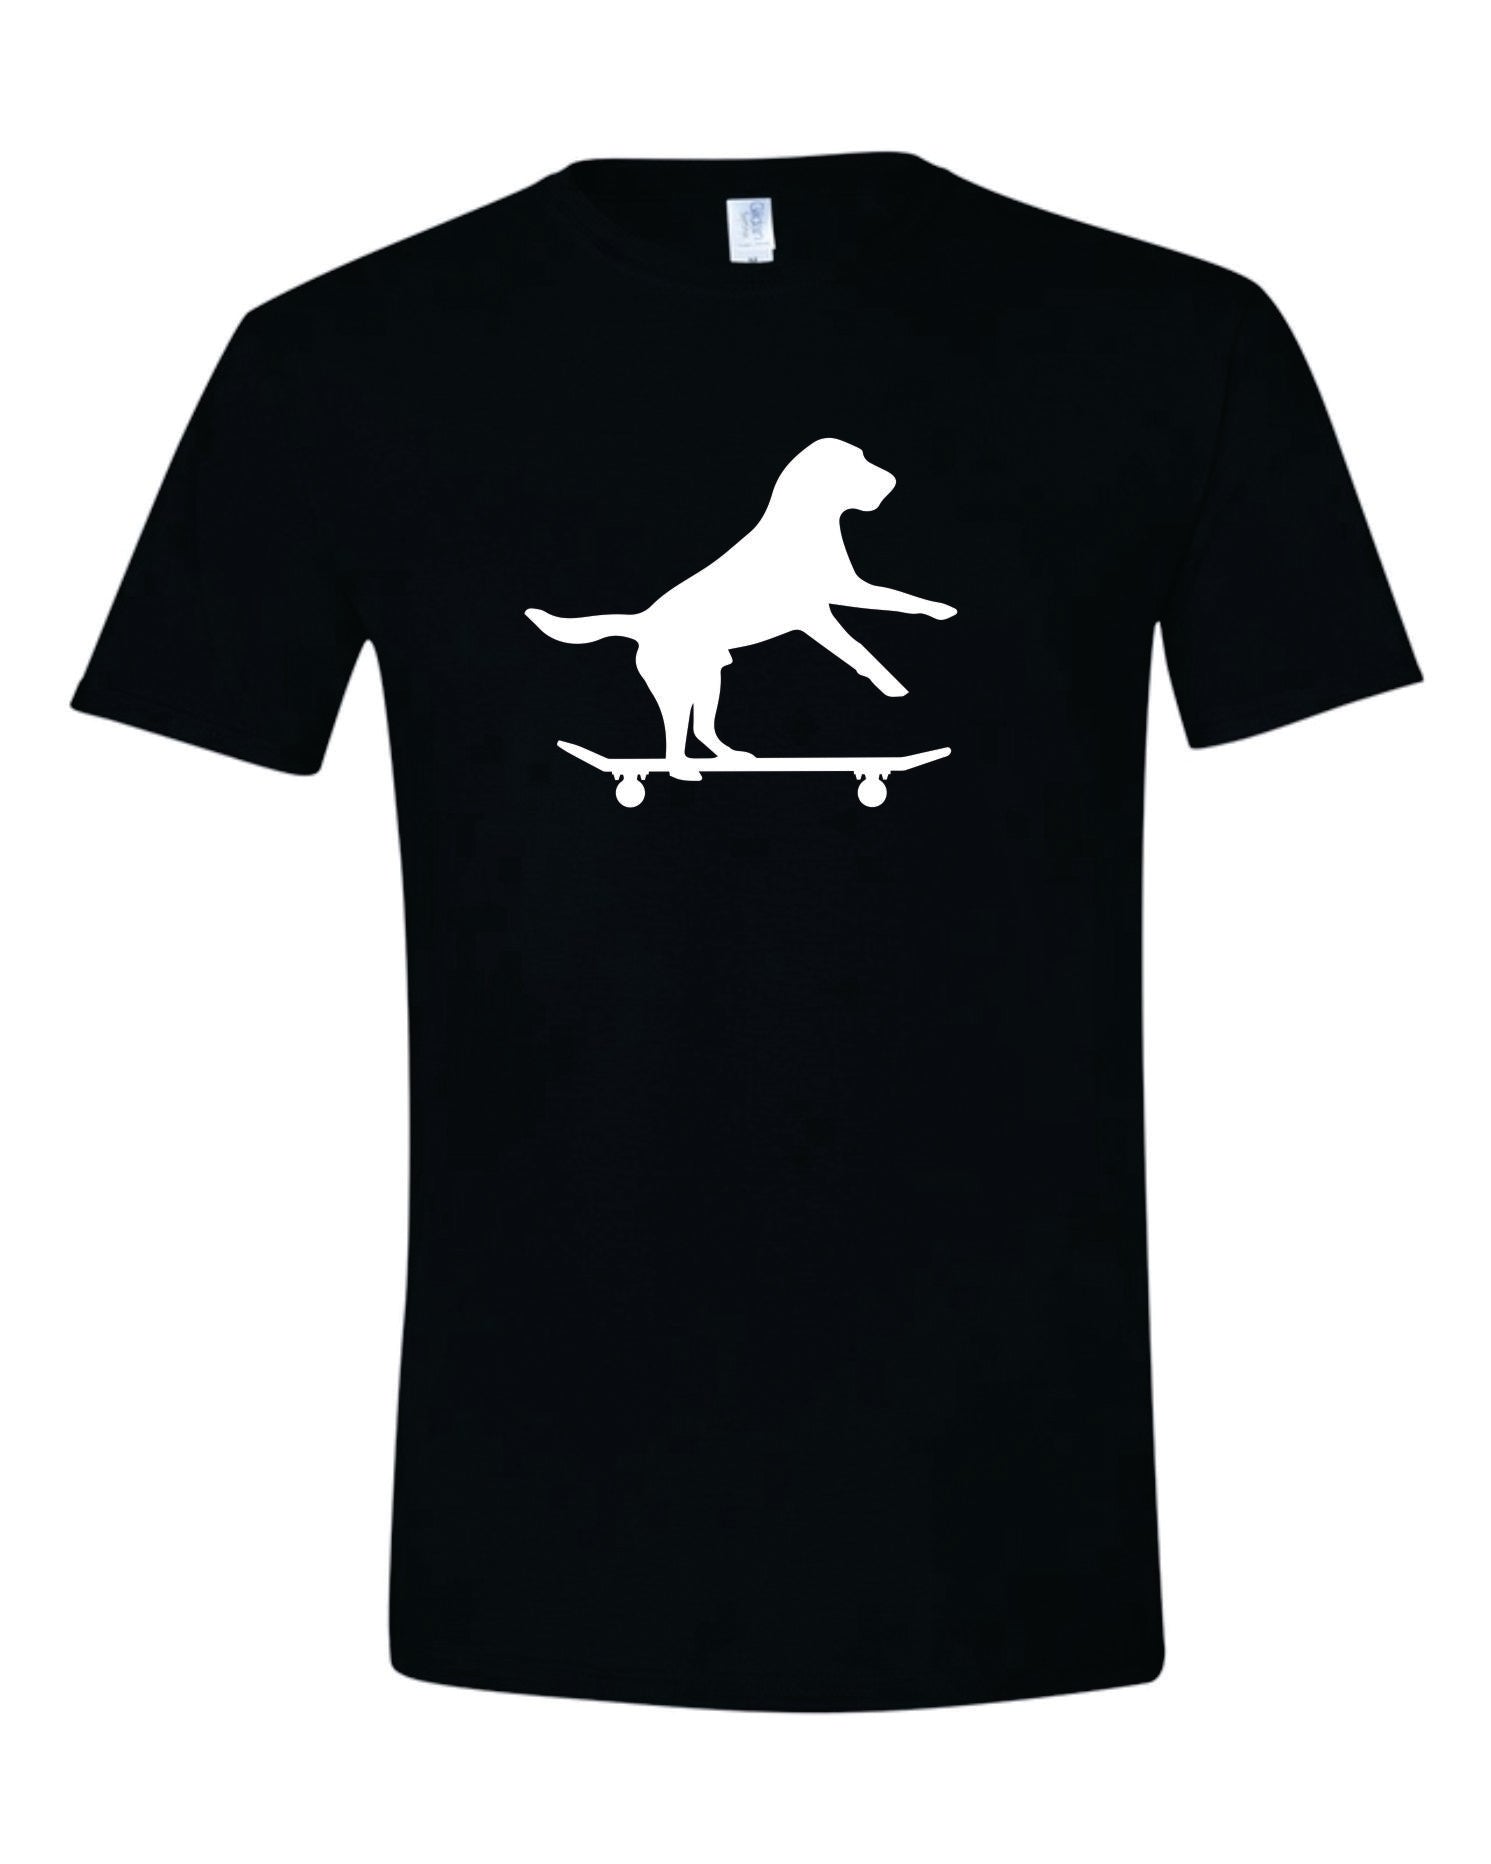 Skateboarding Dog Graphic Shirt - Fun Design